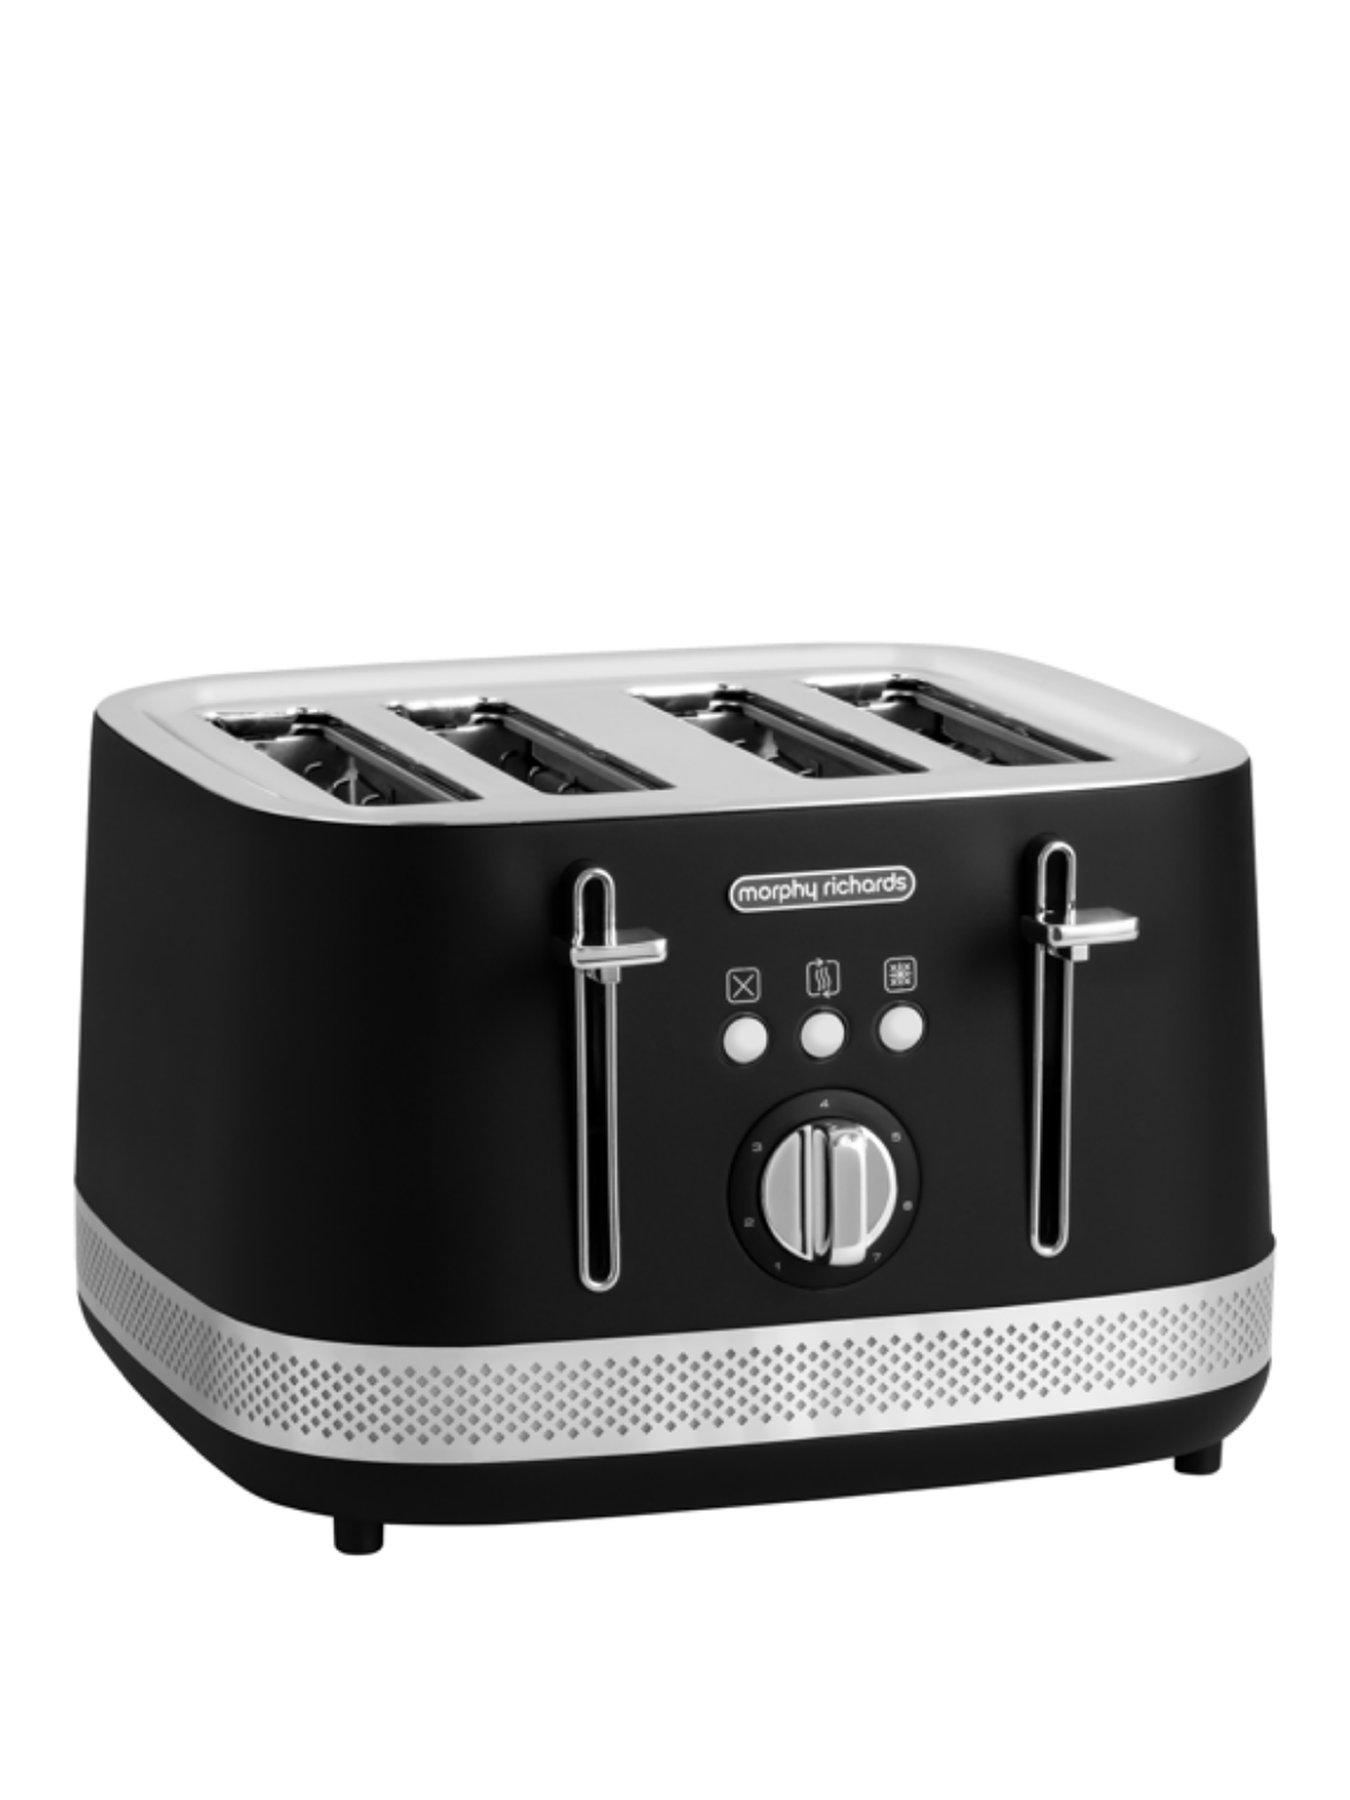 https://media.littlewoods.com/i/littlewoods/VABXE_SQ1_0000000088_NO_COLOR_SLf/morphy-richards-illumination-248020-4-slice-toaster-black.jpg?$180x240_retinamobilex2$&$roundel_littlewoods$&p1_img=lw_sale_2018&p3_img=video_roundel